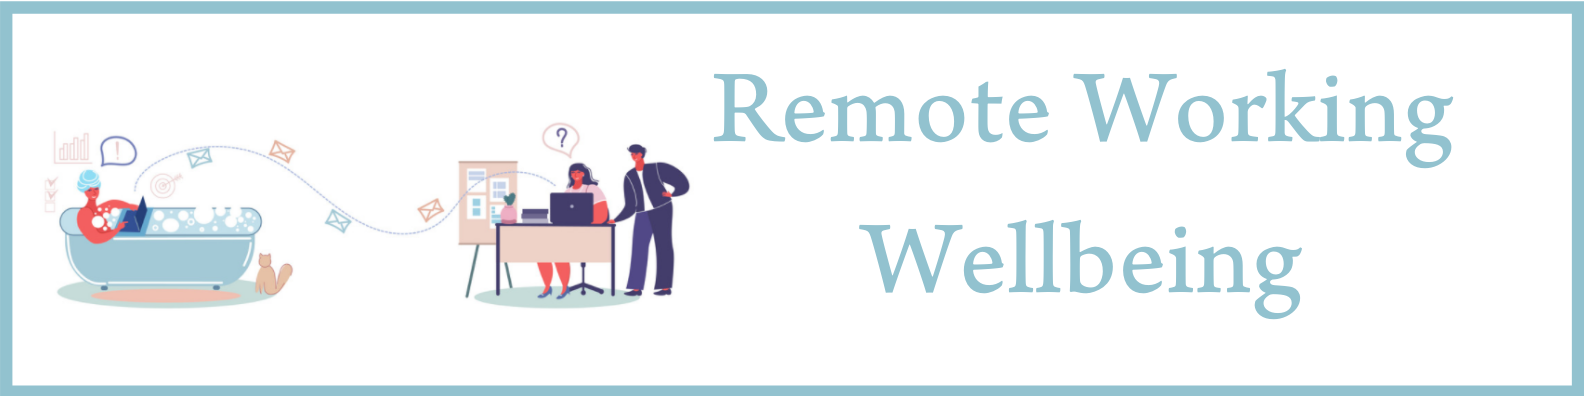 Remote Working Wellbeing